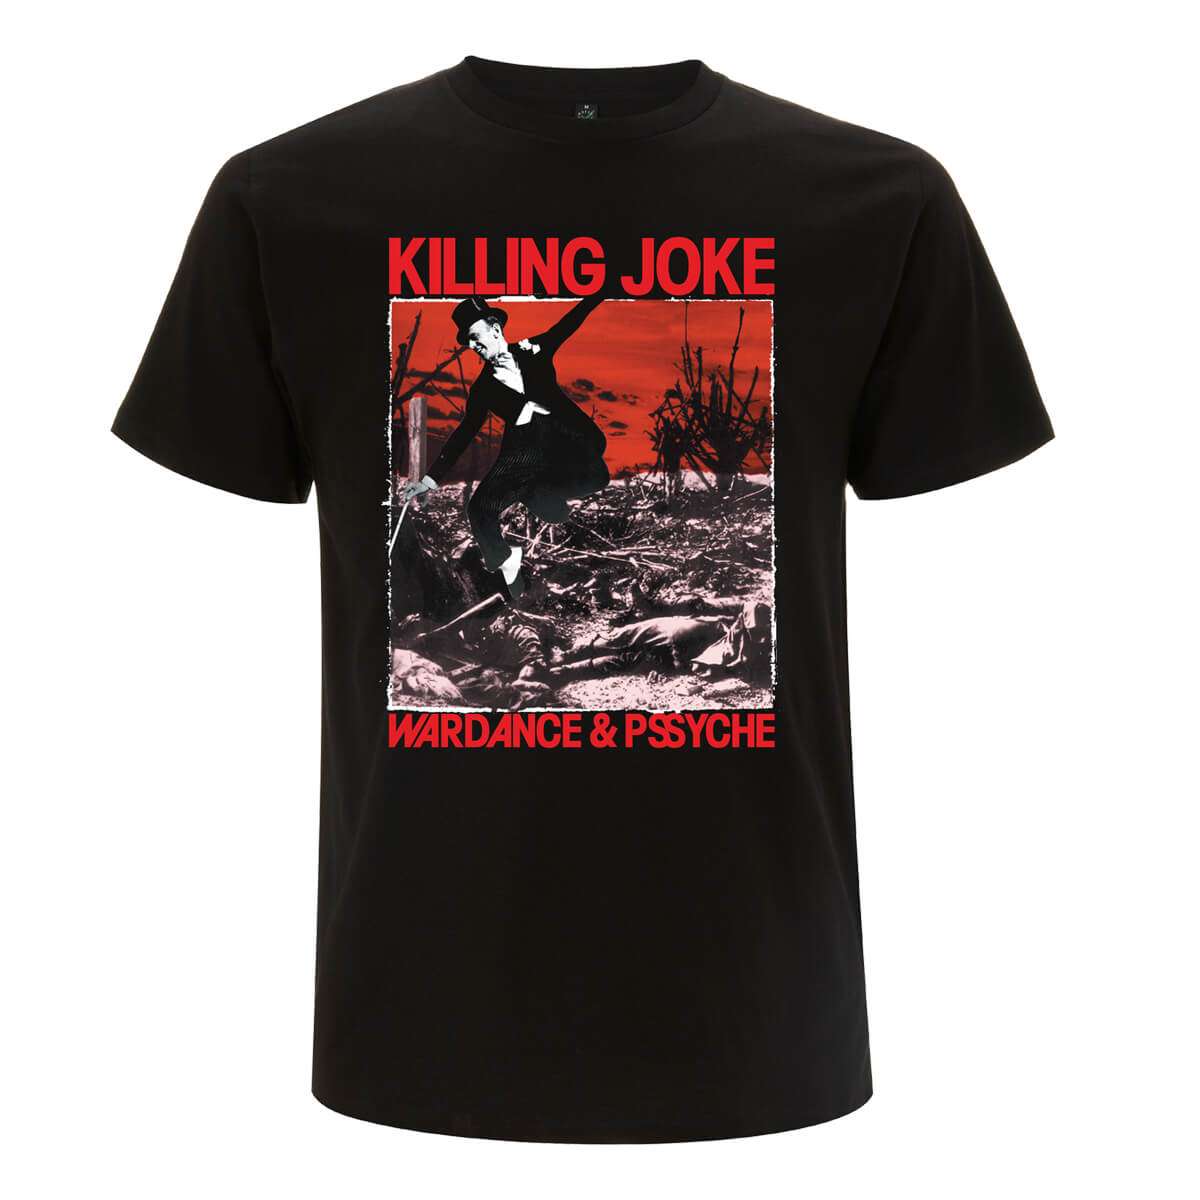 Wardance Black T-Shirt - Killing Joke